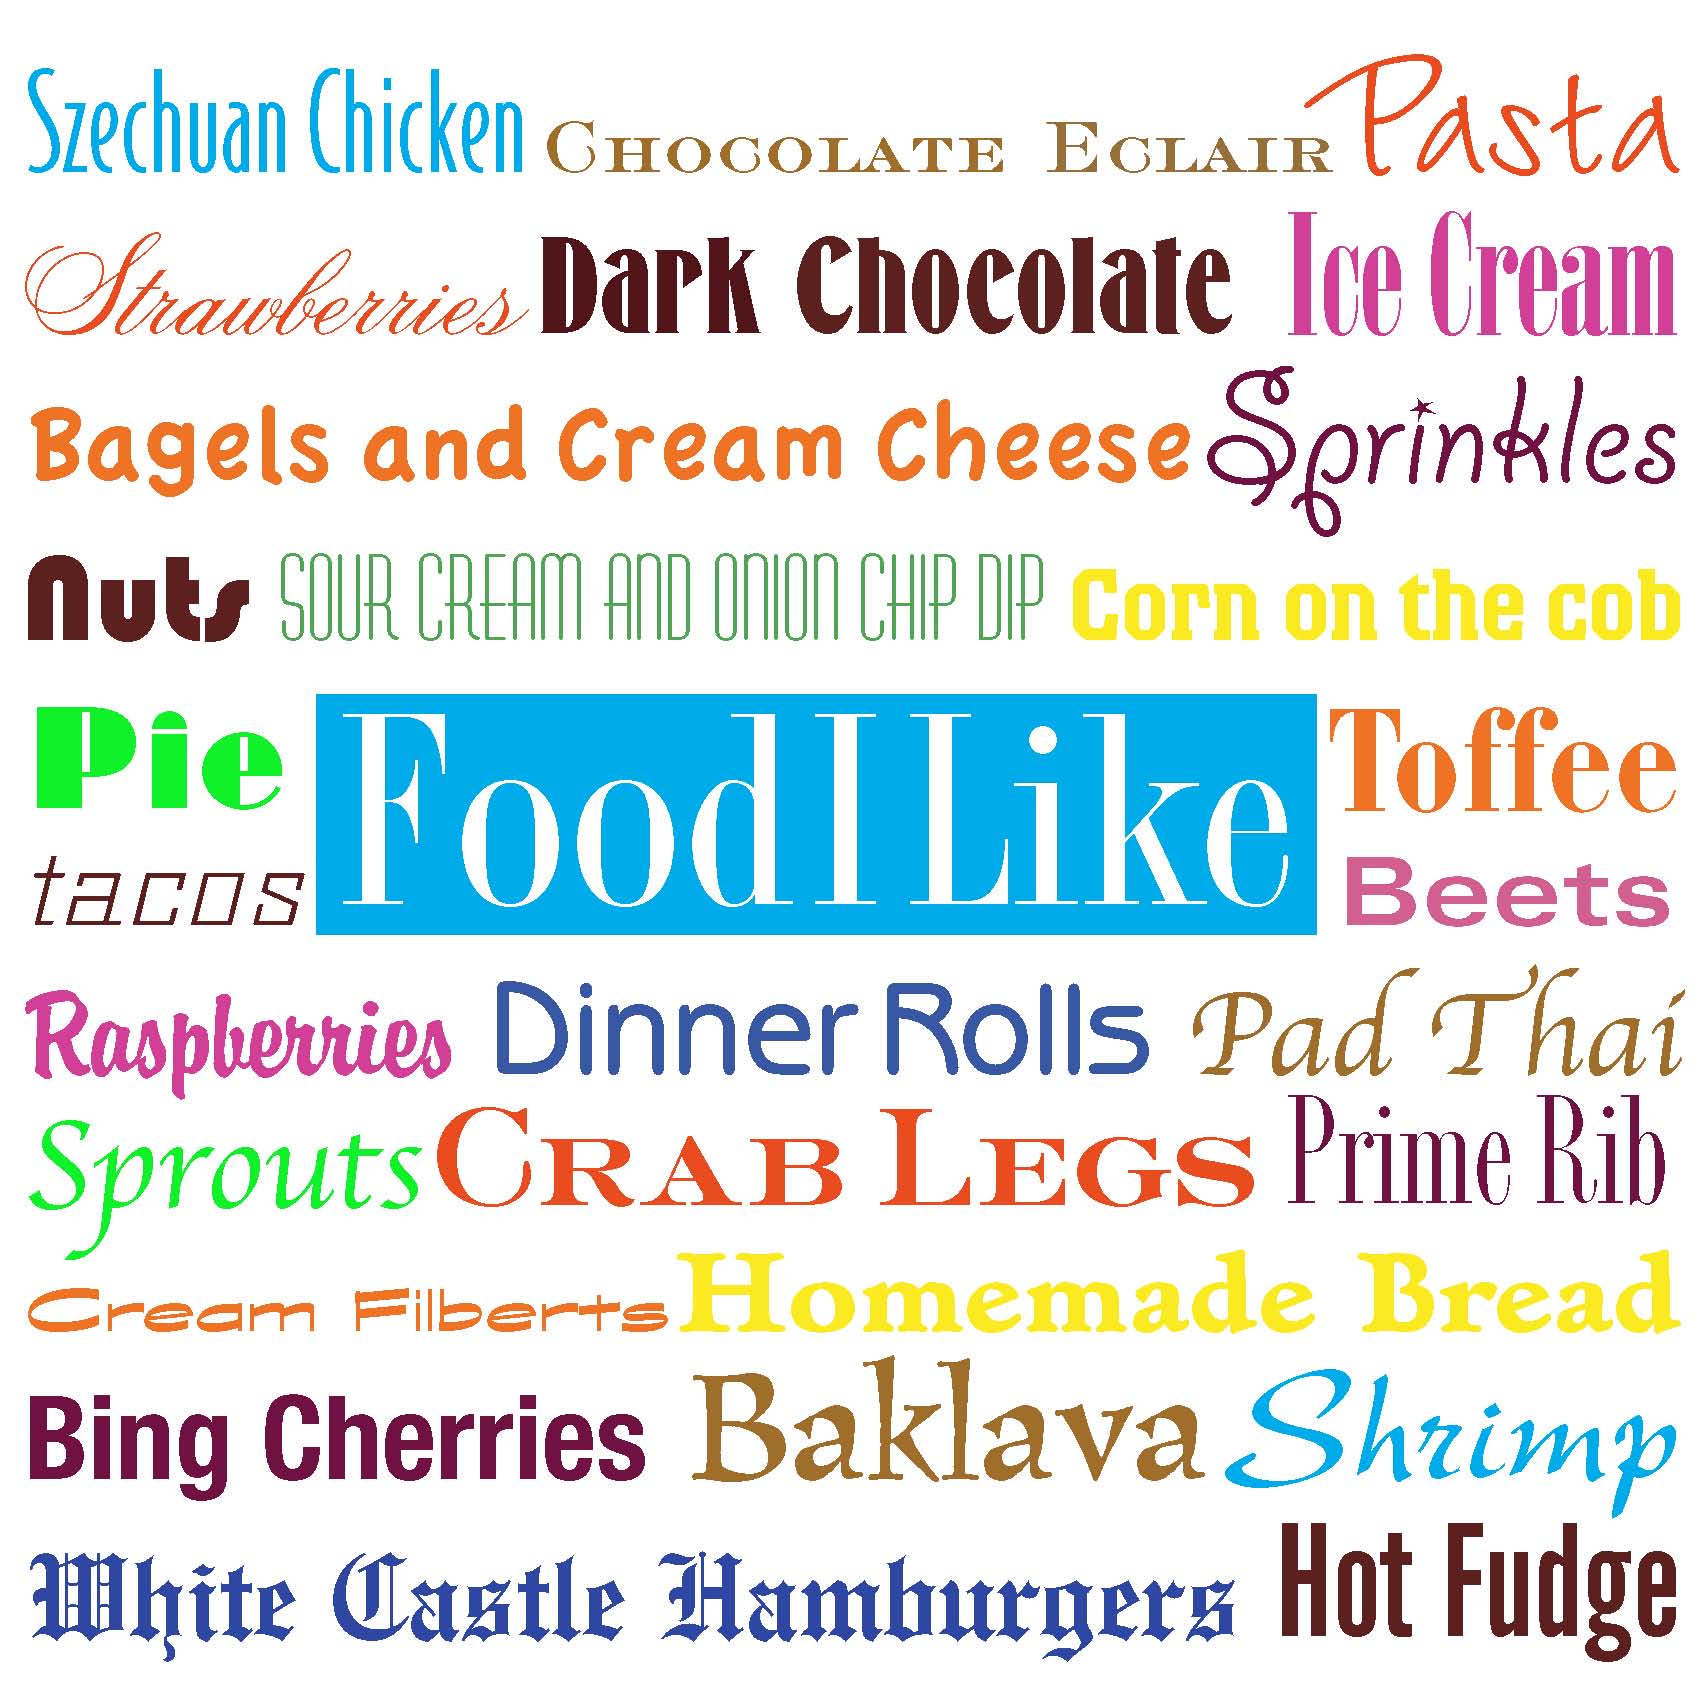 Food I Like Cookbook Design and Illustration https://www.aprilkullis.com/portfolio.html